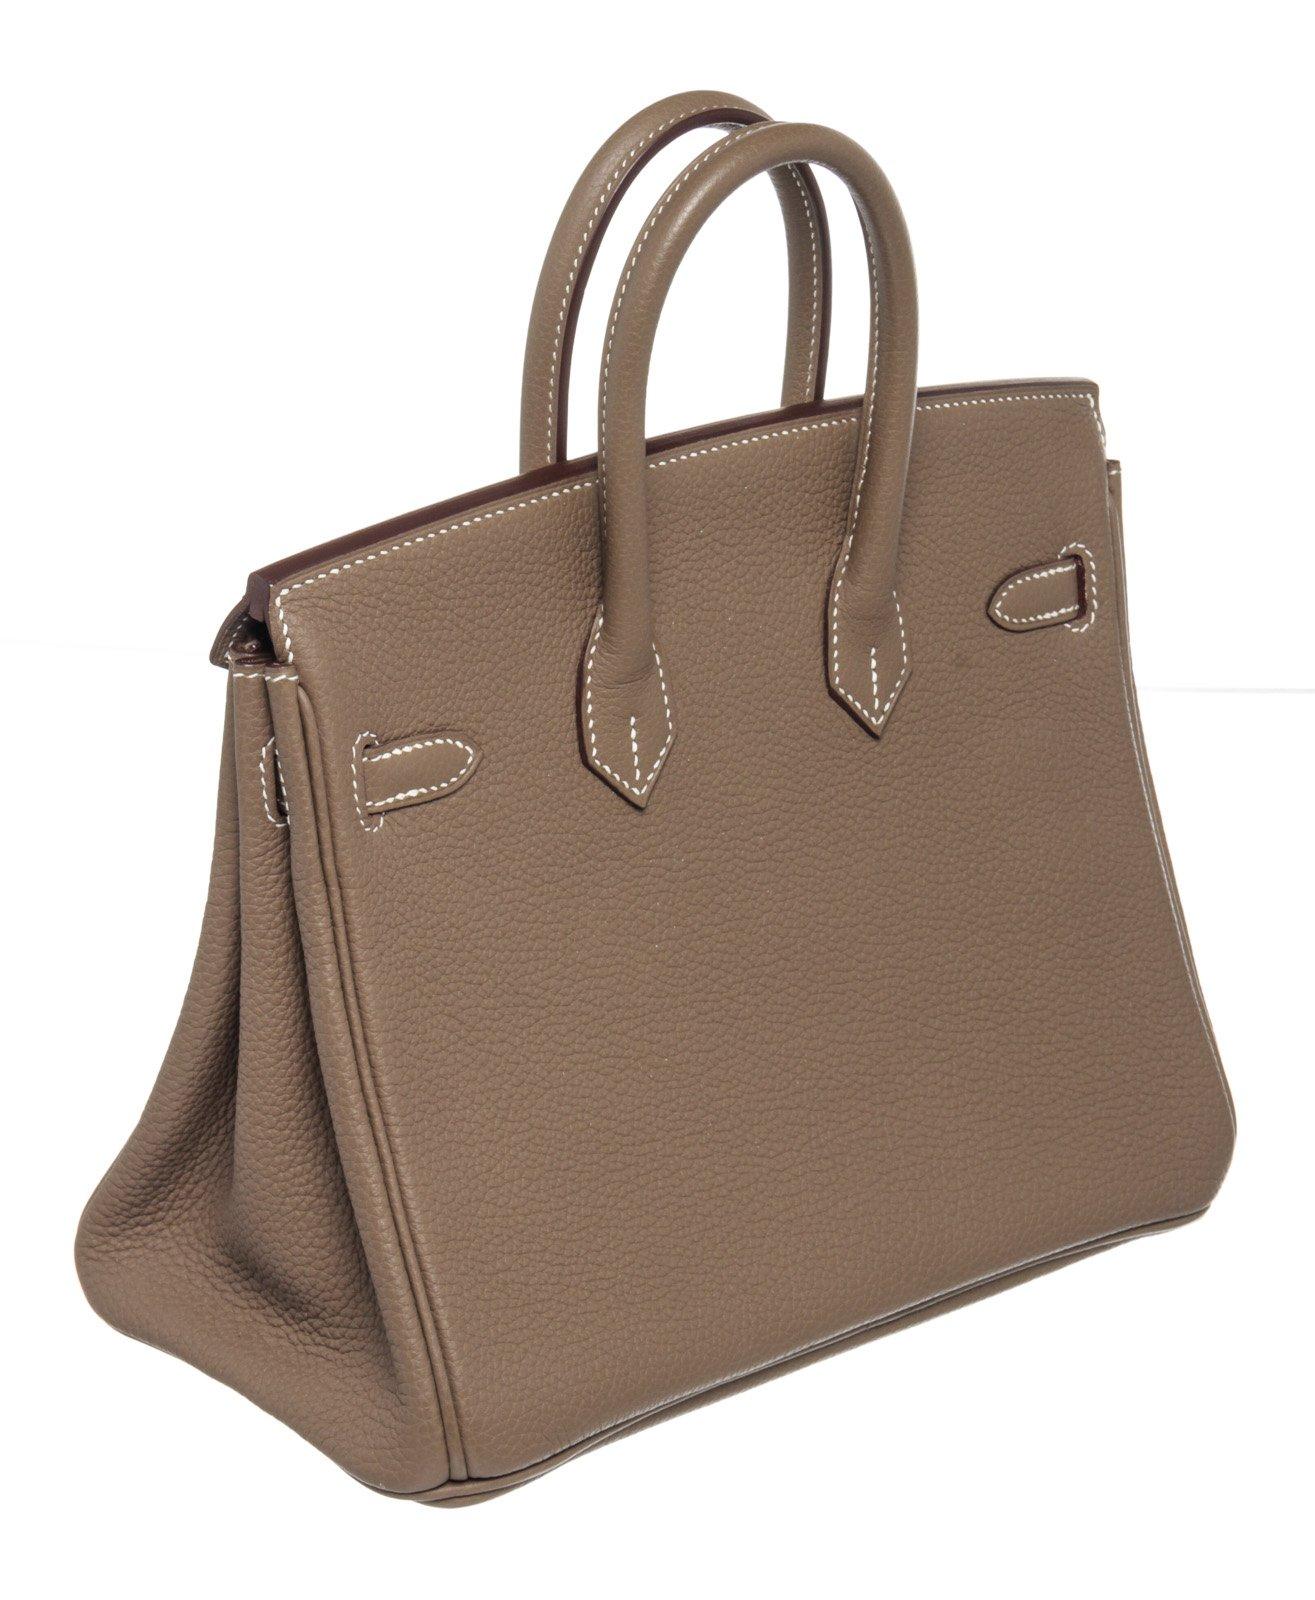 Hermes Brown Leather Birkin 25cm Satchel Bag 2